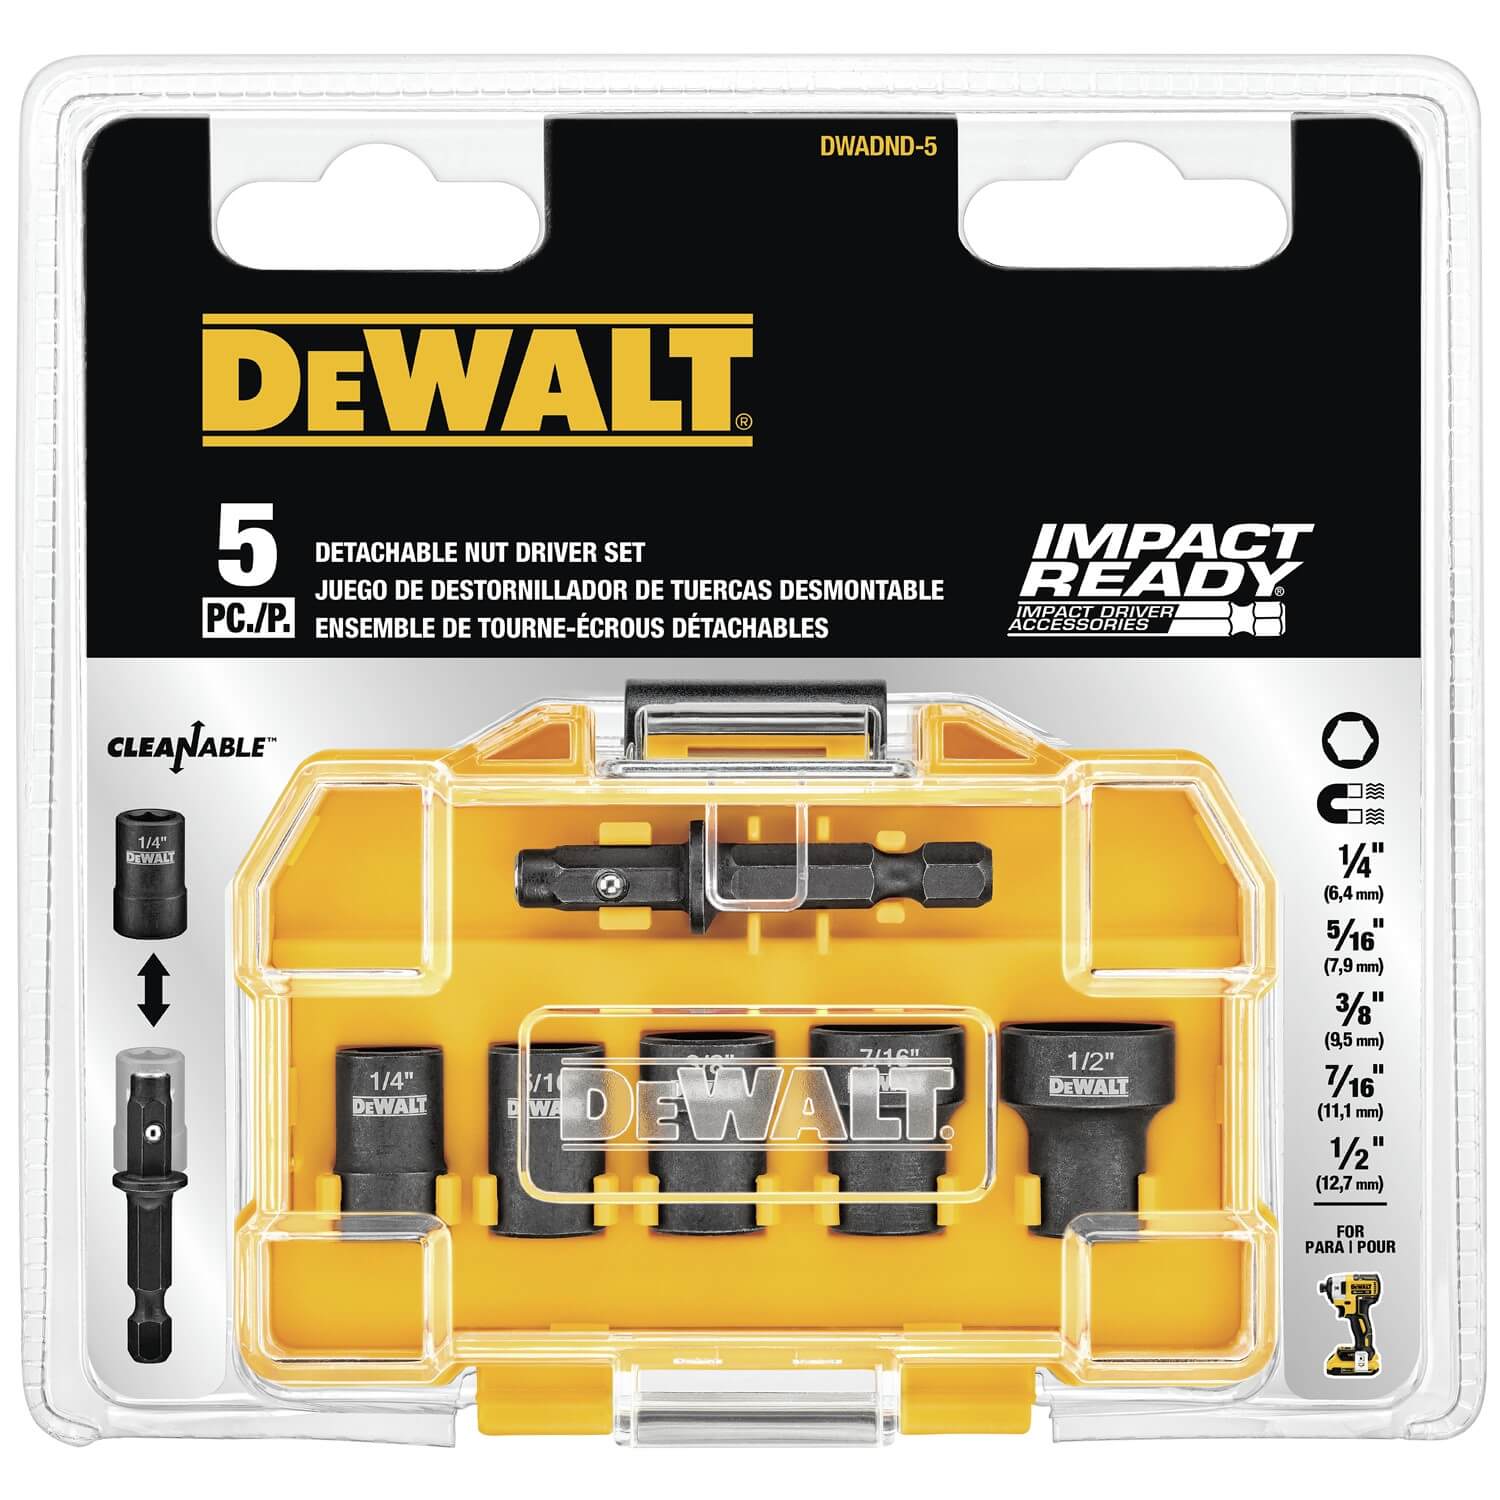 DEWALT DWADND-5 - IMPACT READY 5-Piece Nutsetter Impact Driver Bit Set - wise-line-tools